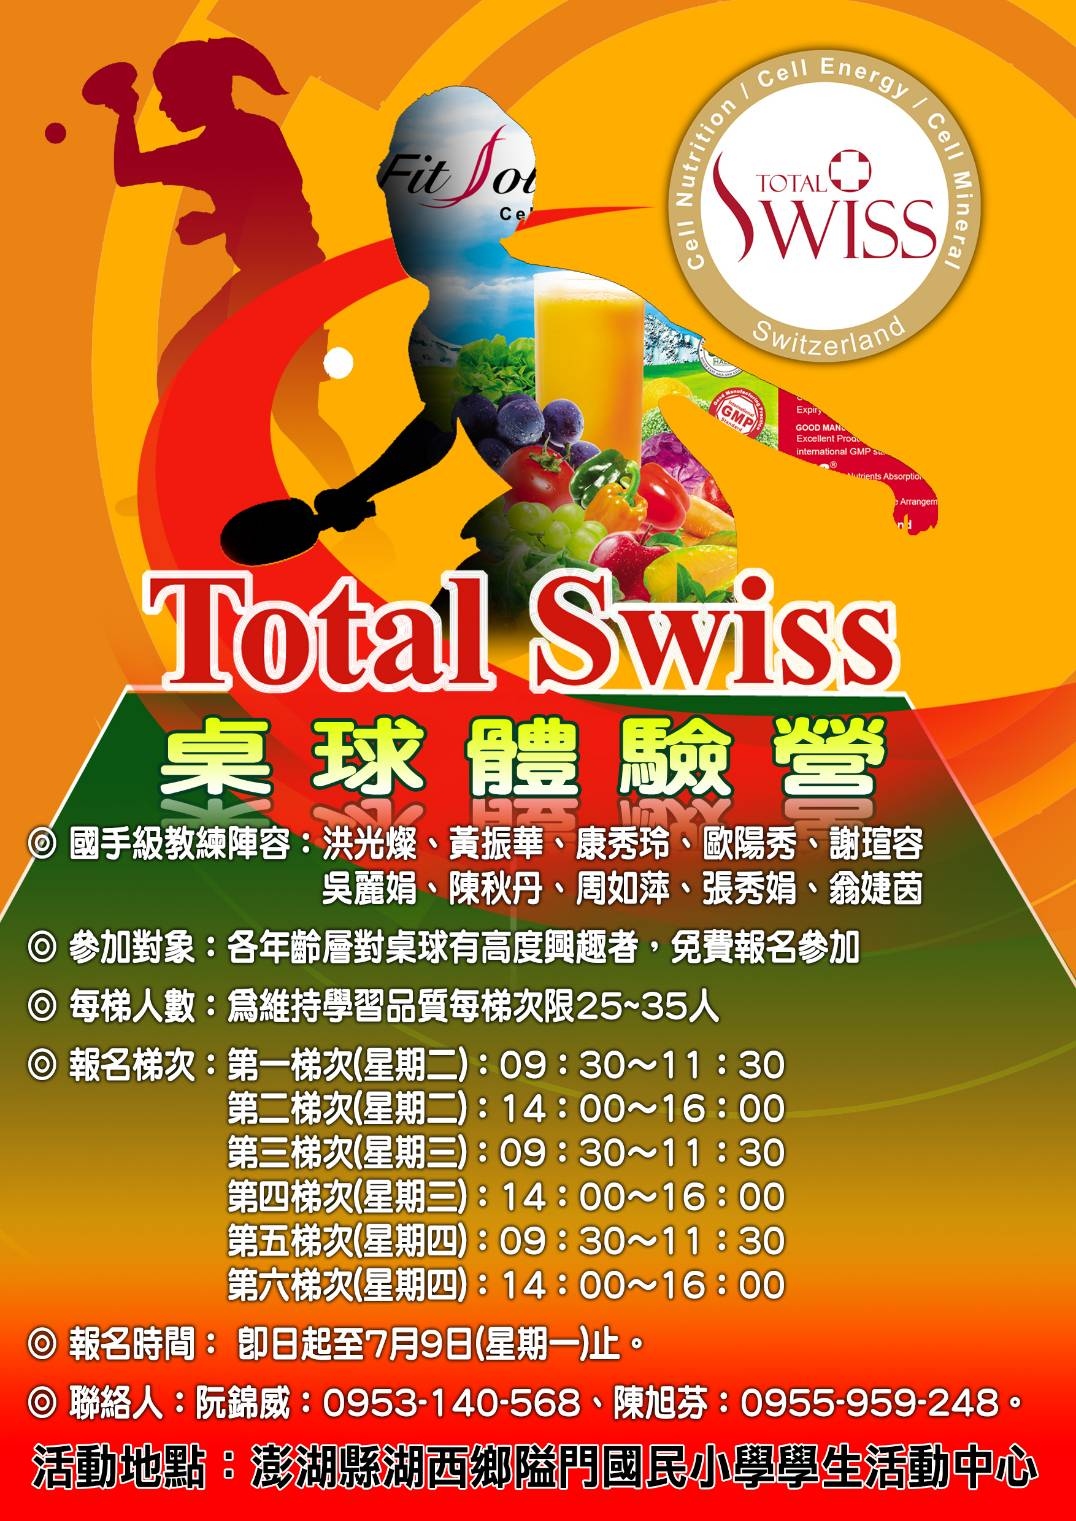 Total Swiss 八馬公司桌球體驗營 推動運動健康與營養